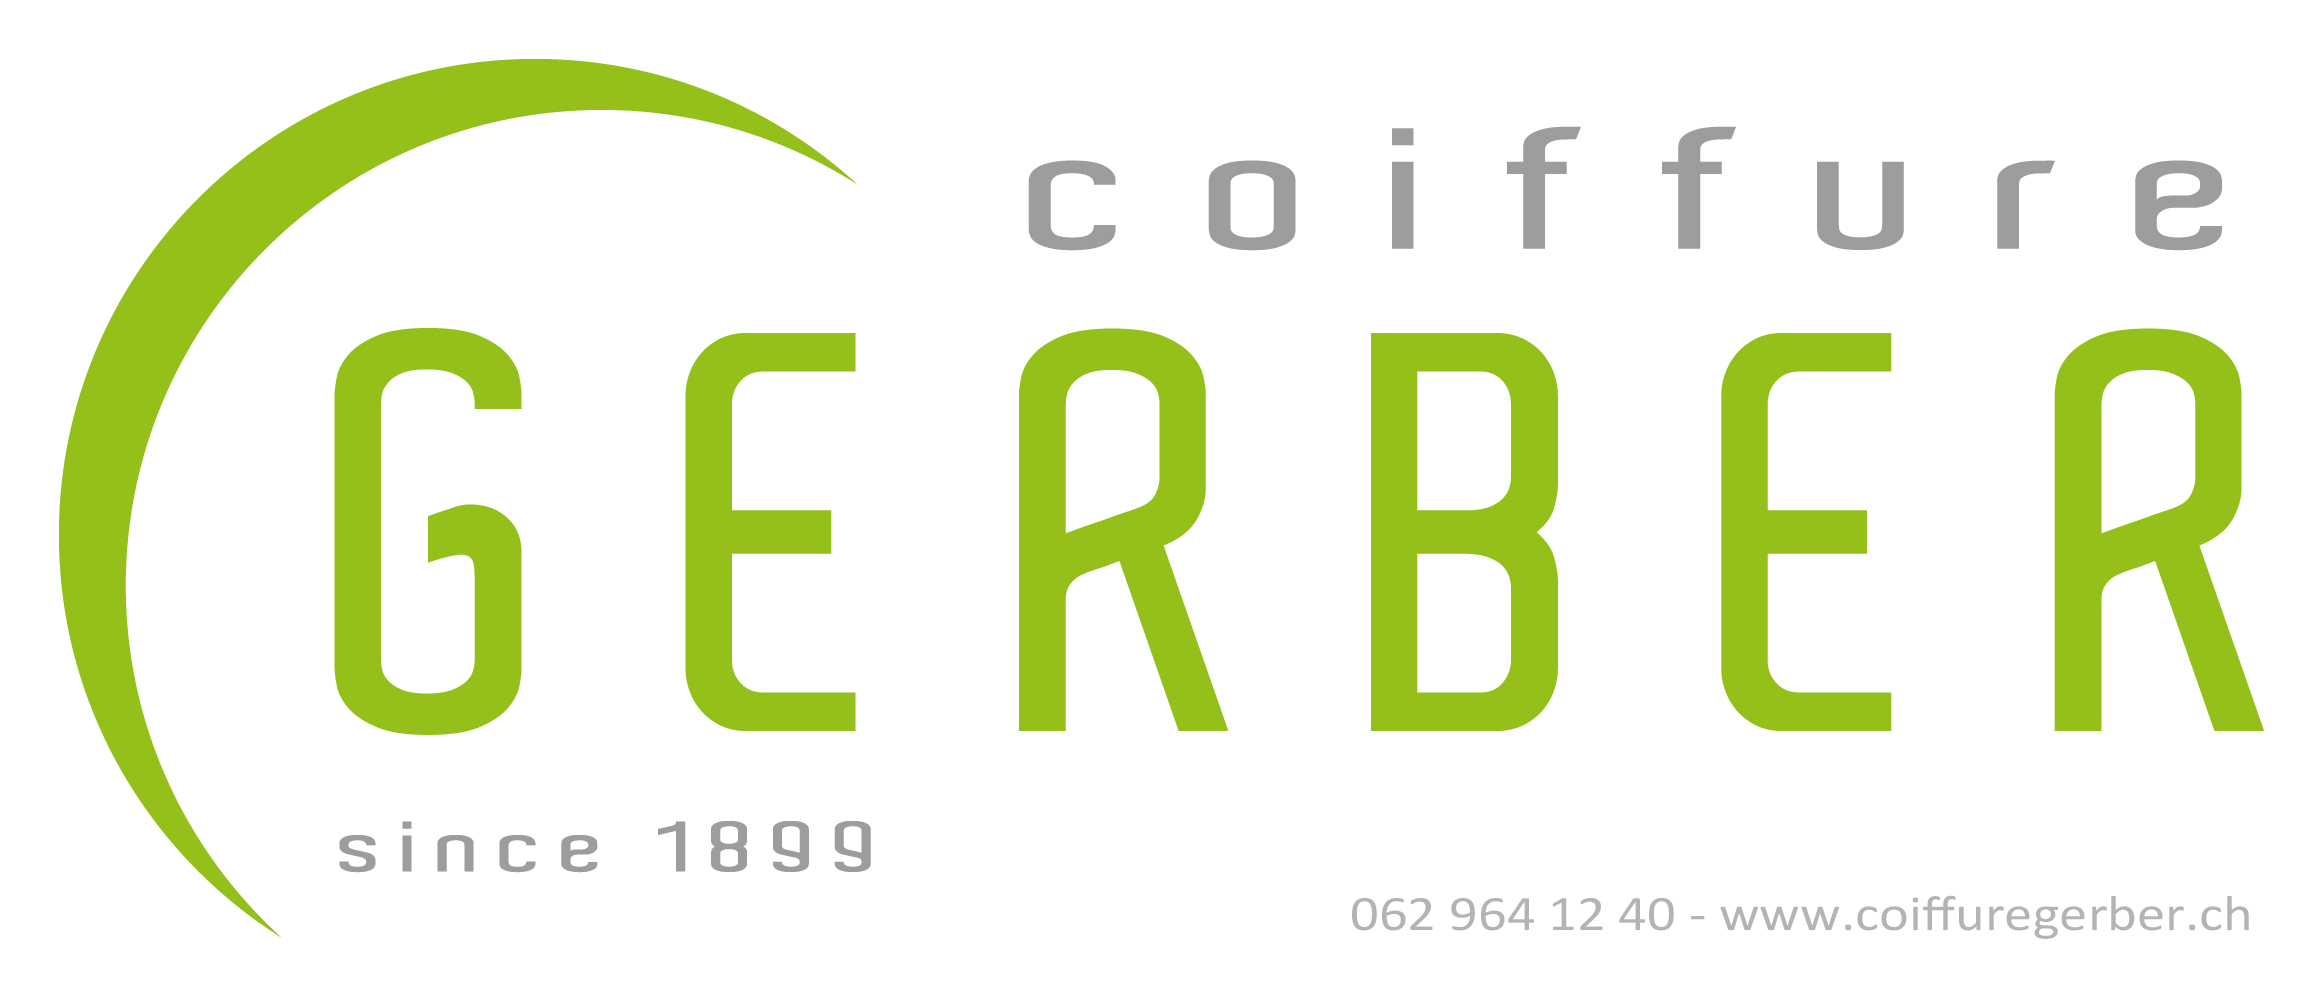 Logo Coiffure Gerber def 1